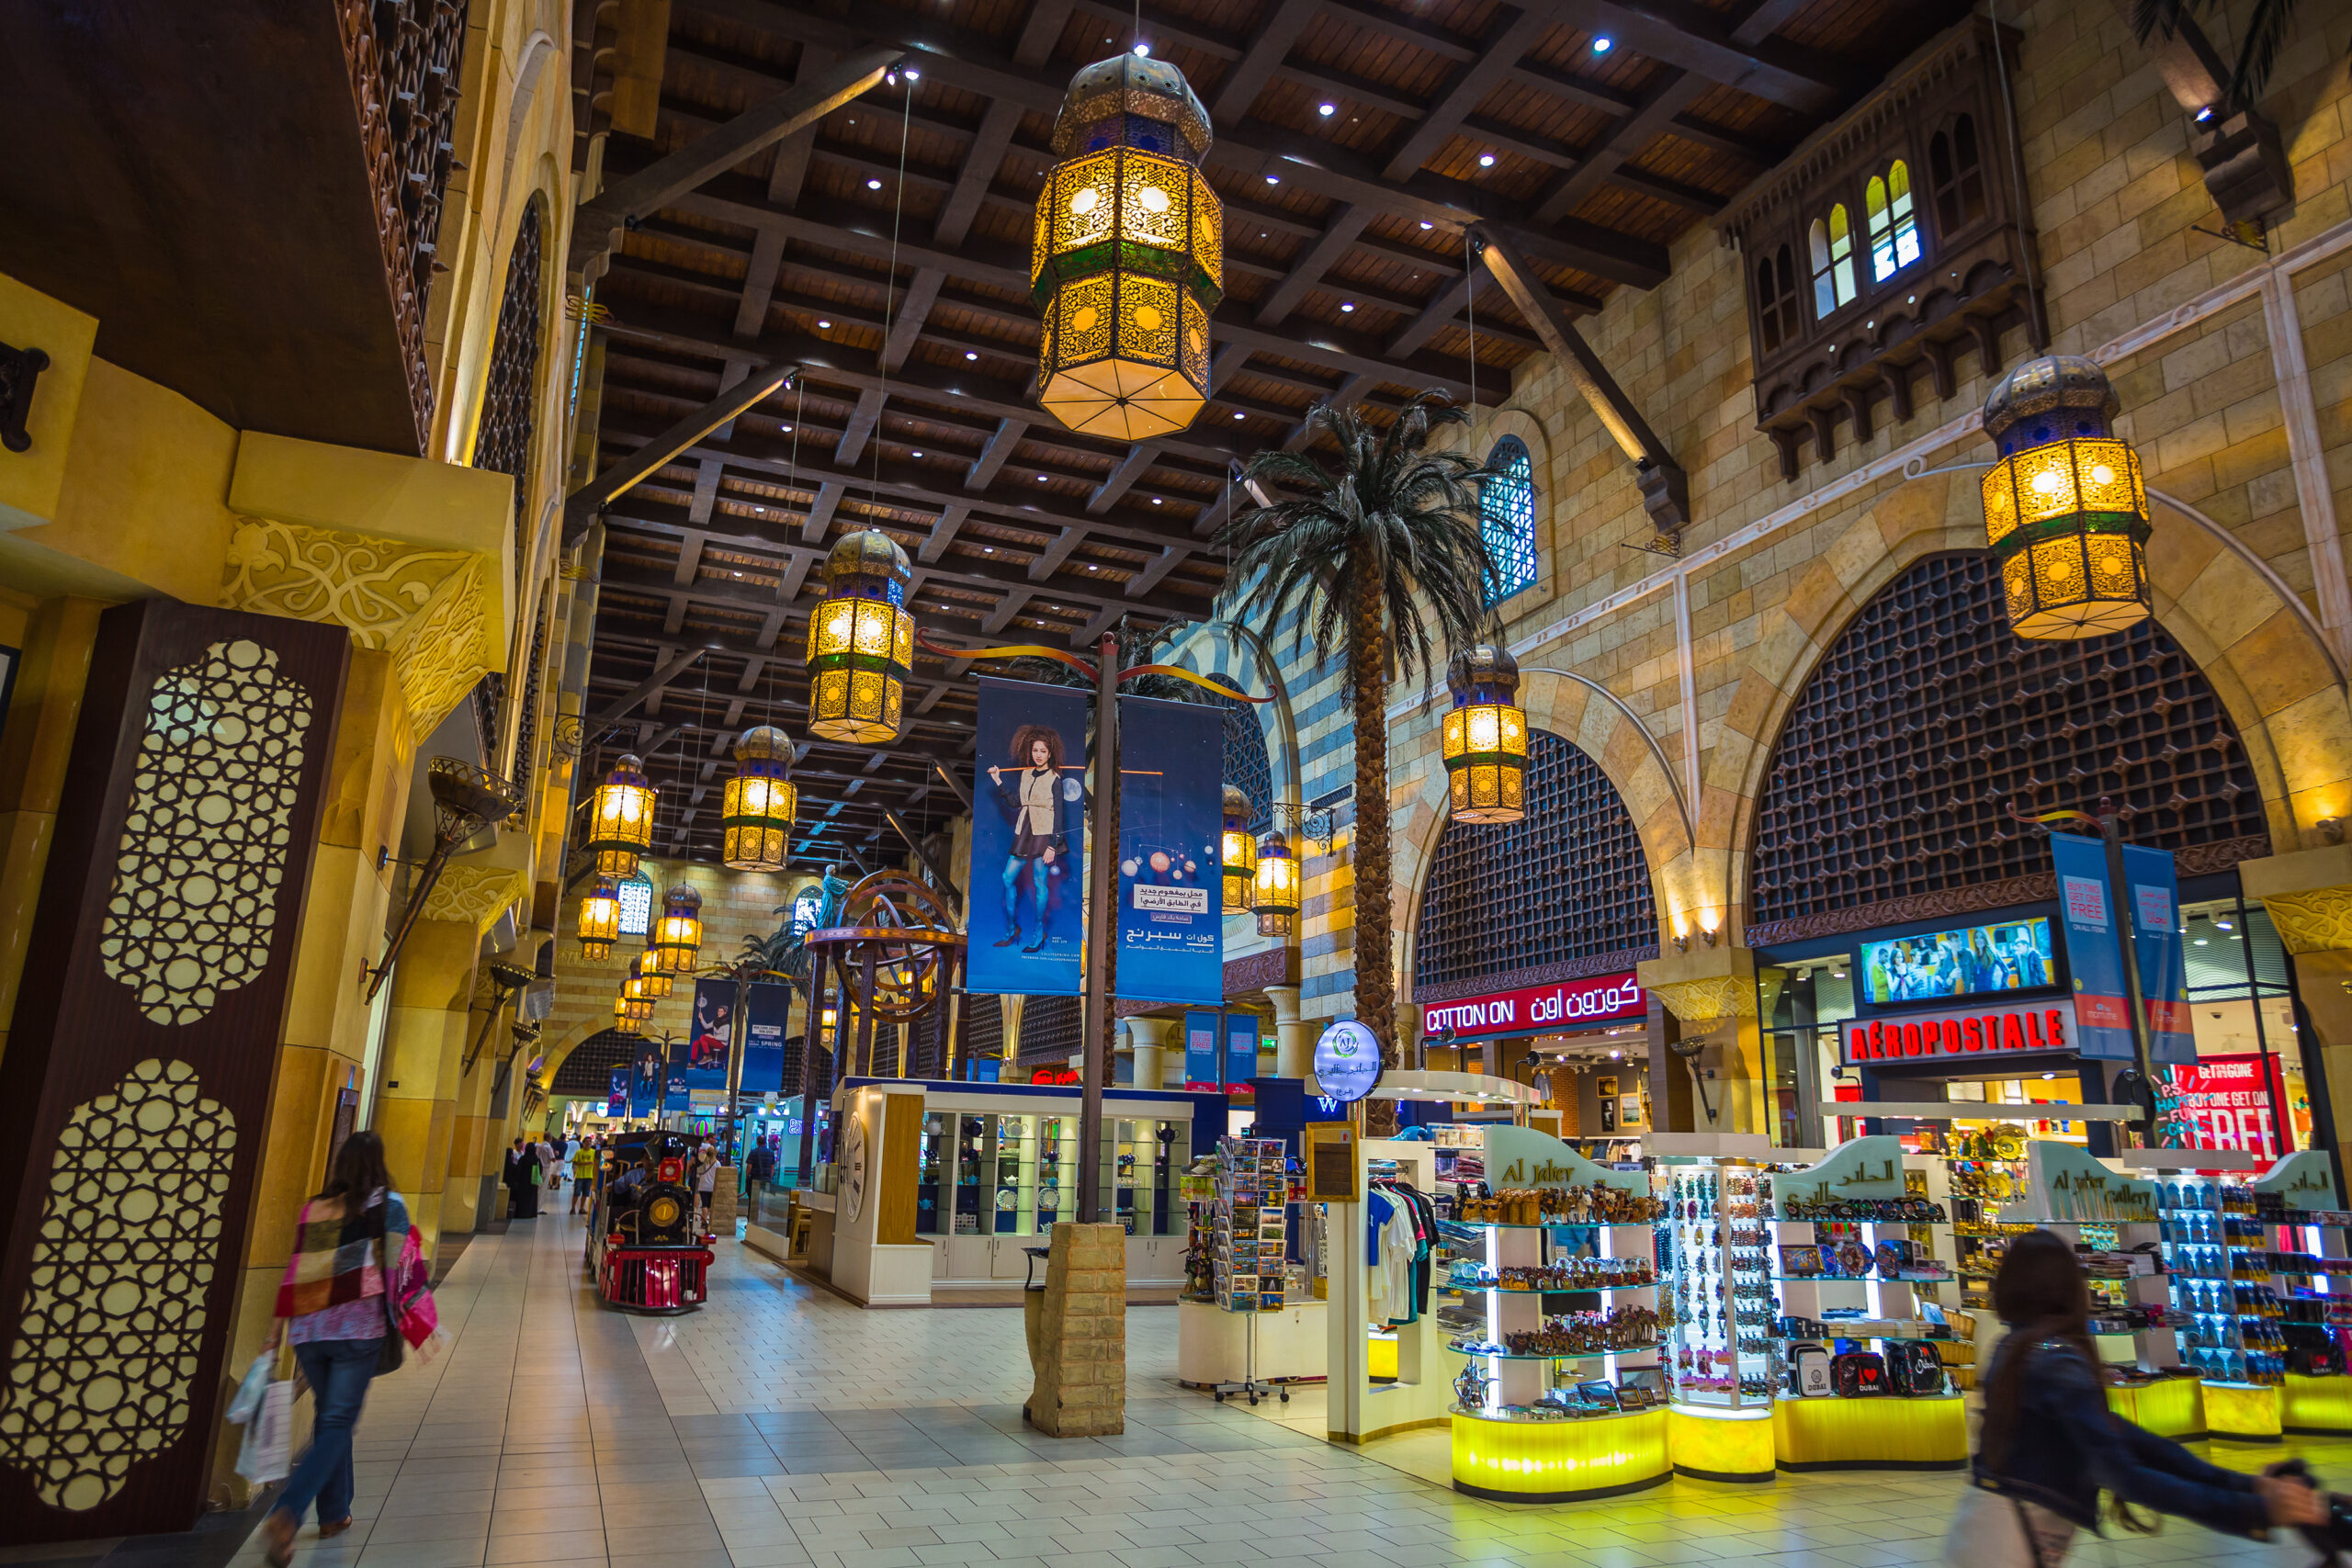 Ibn Battuta Mall in Dubai - Egypt Court